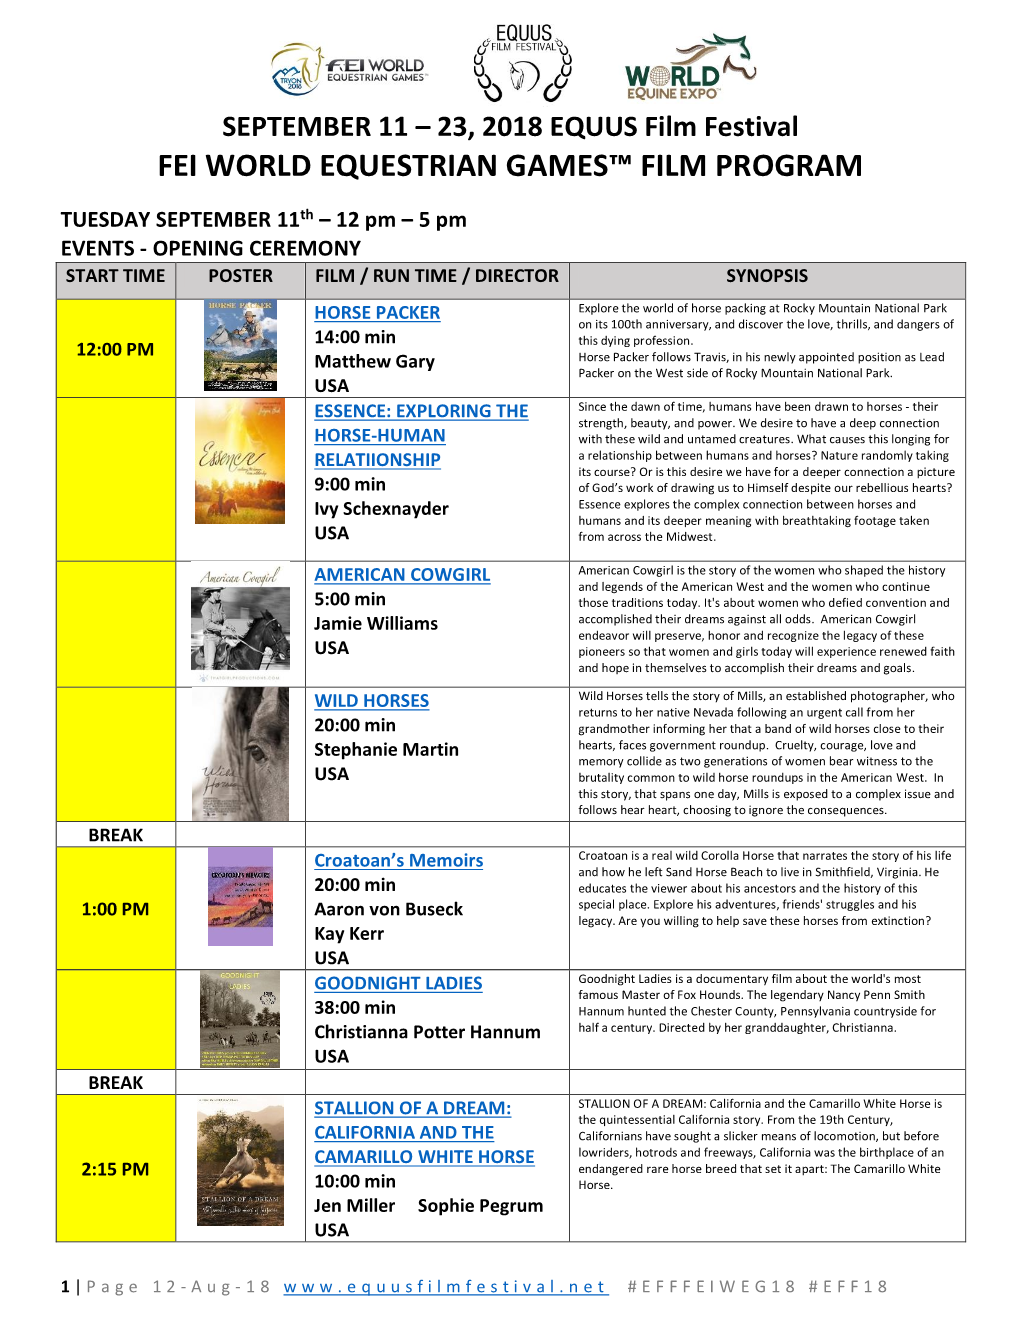 Fei World Equestrian Games™ Film Program